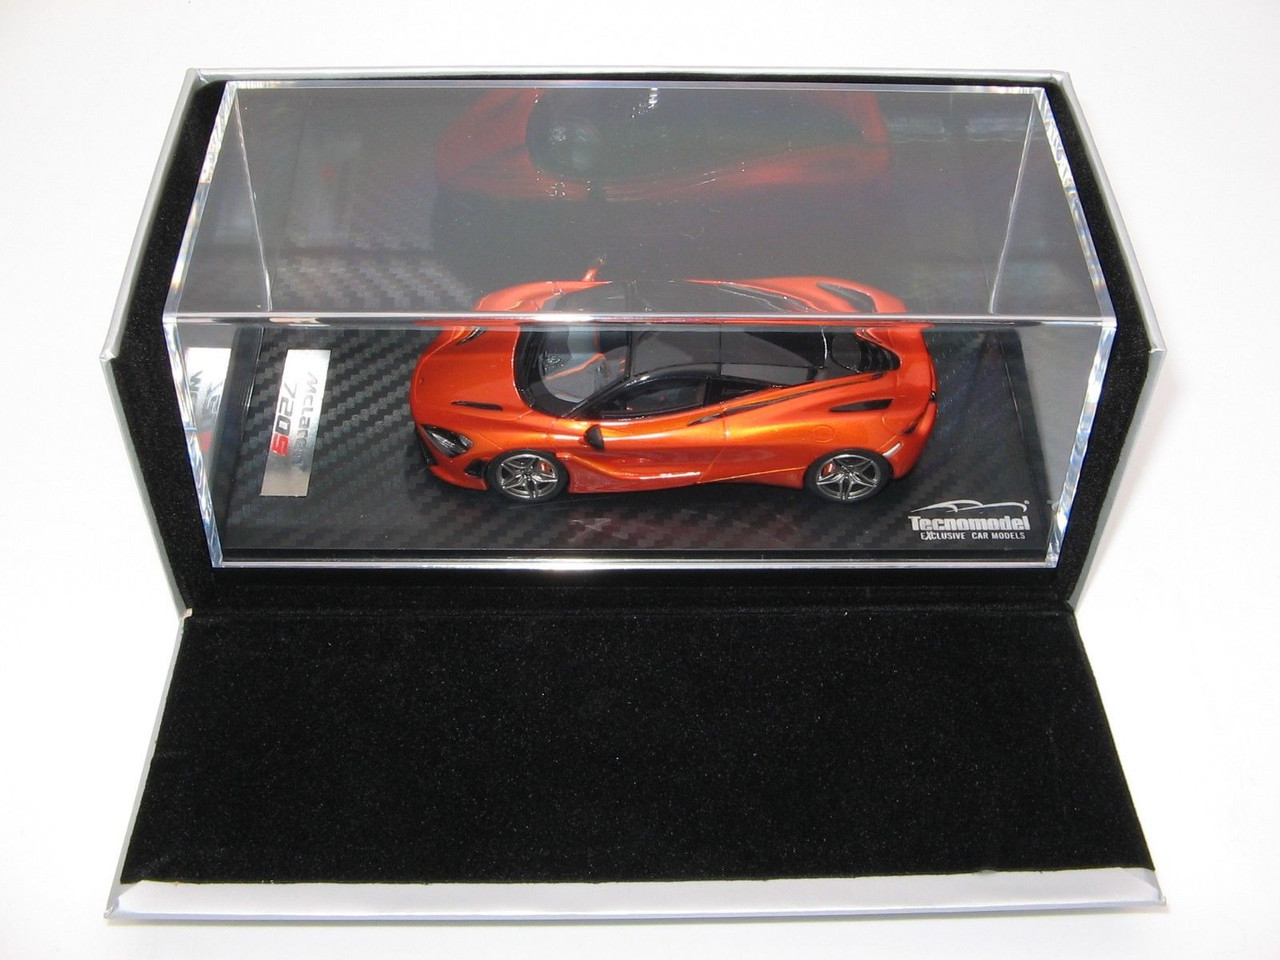 1/43 Scale Tecnomodel Mclaren 720S Azores Orange Géneva Autoshow Car Model Limited 99